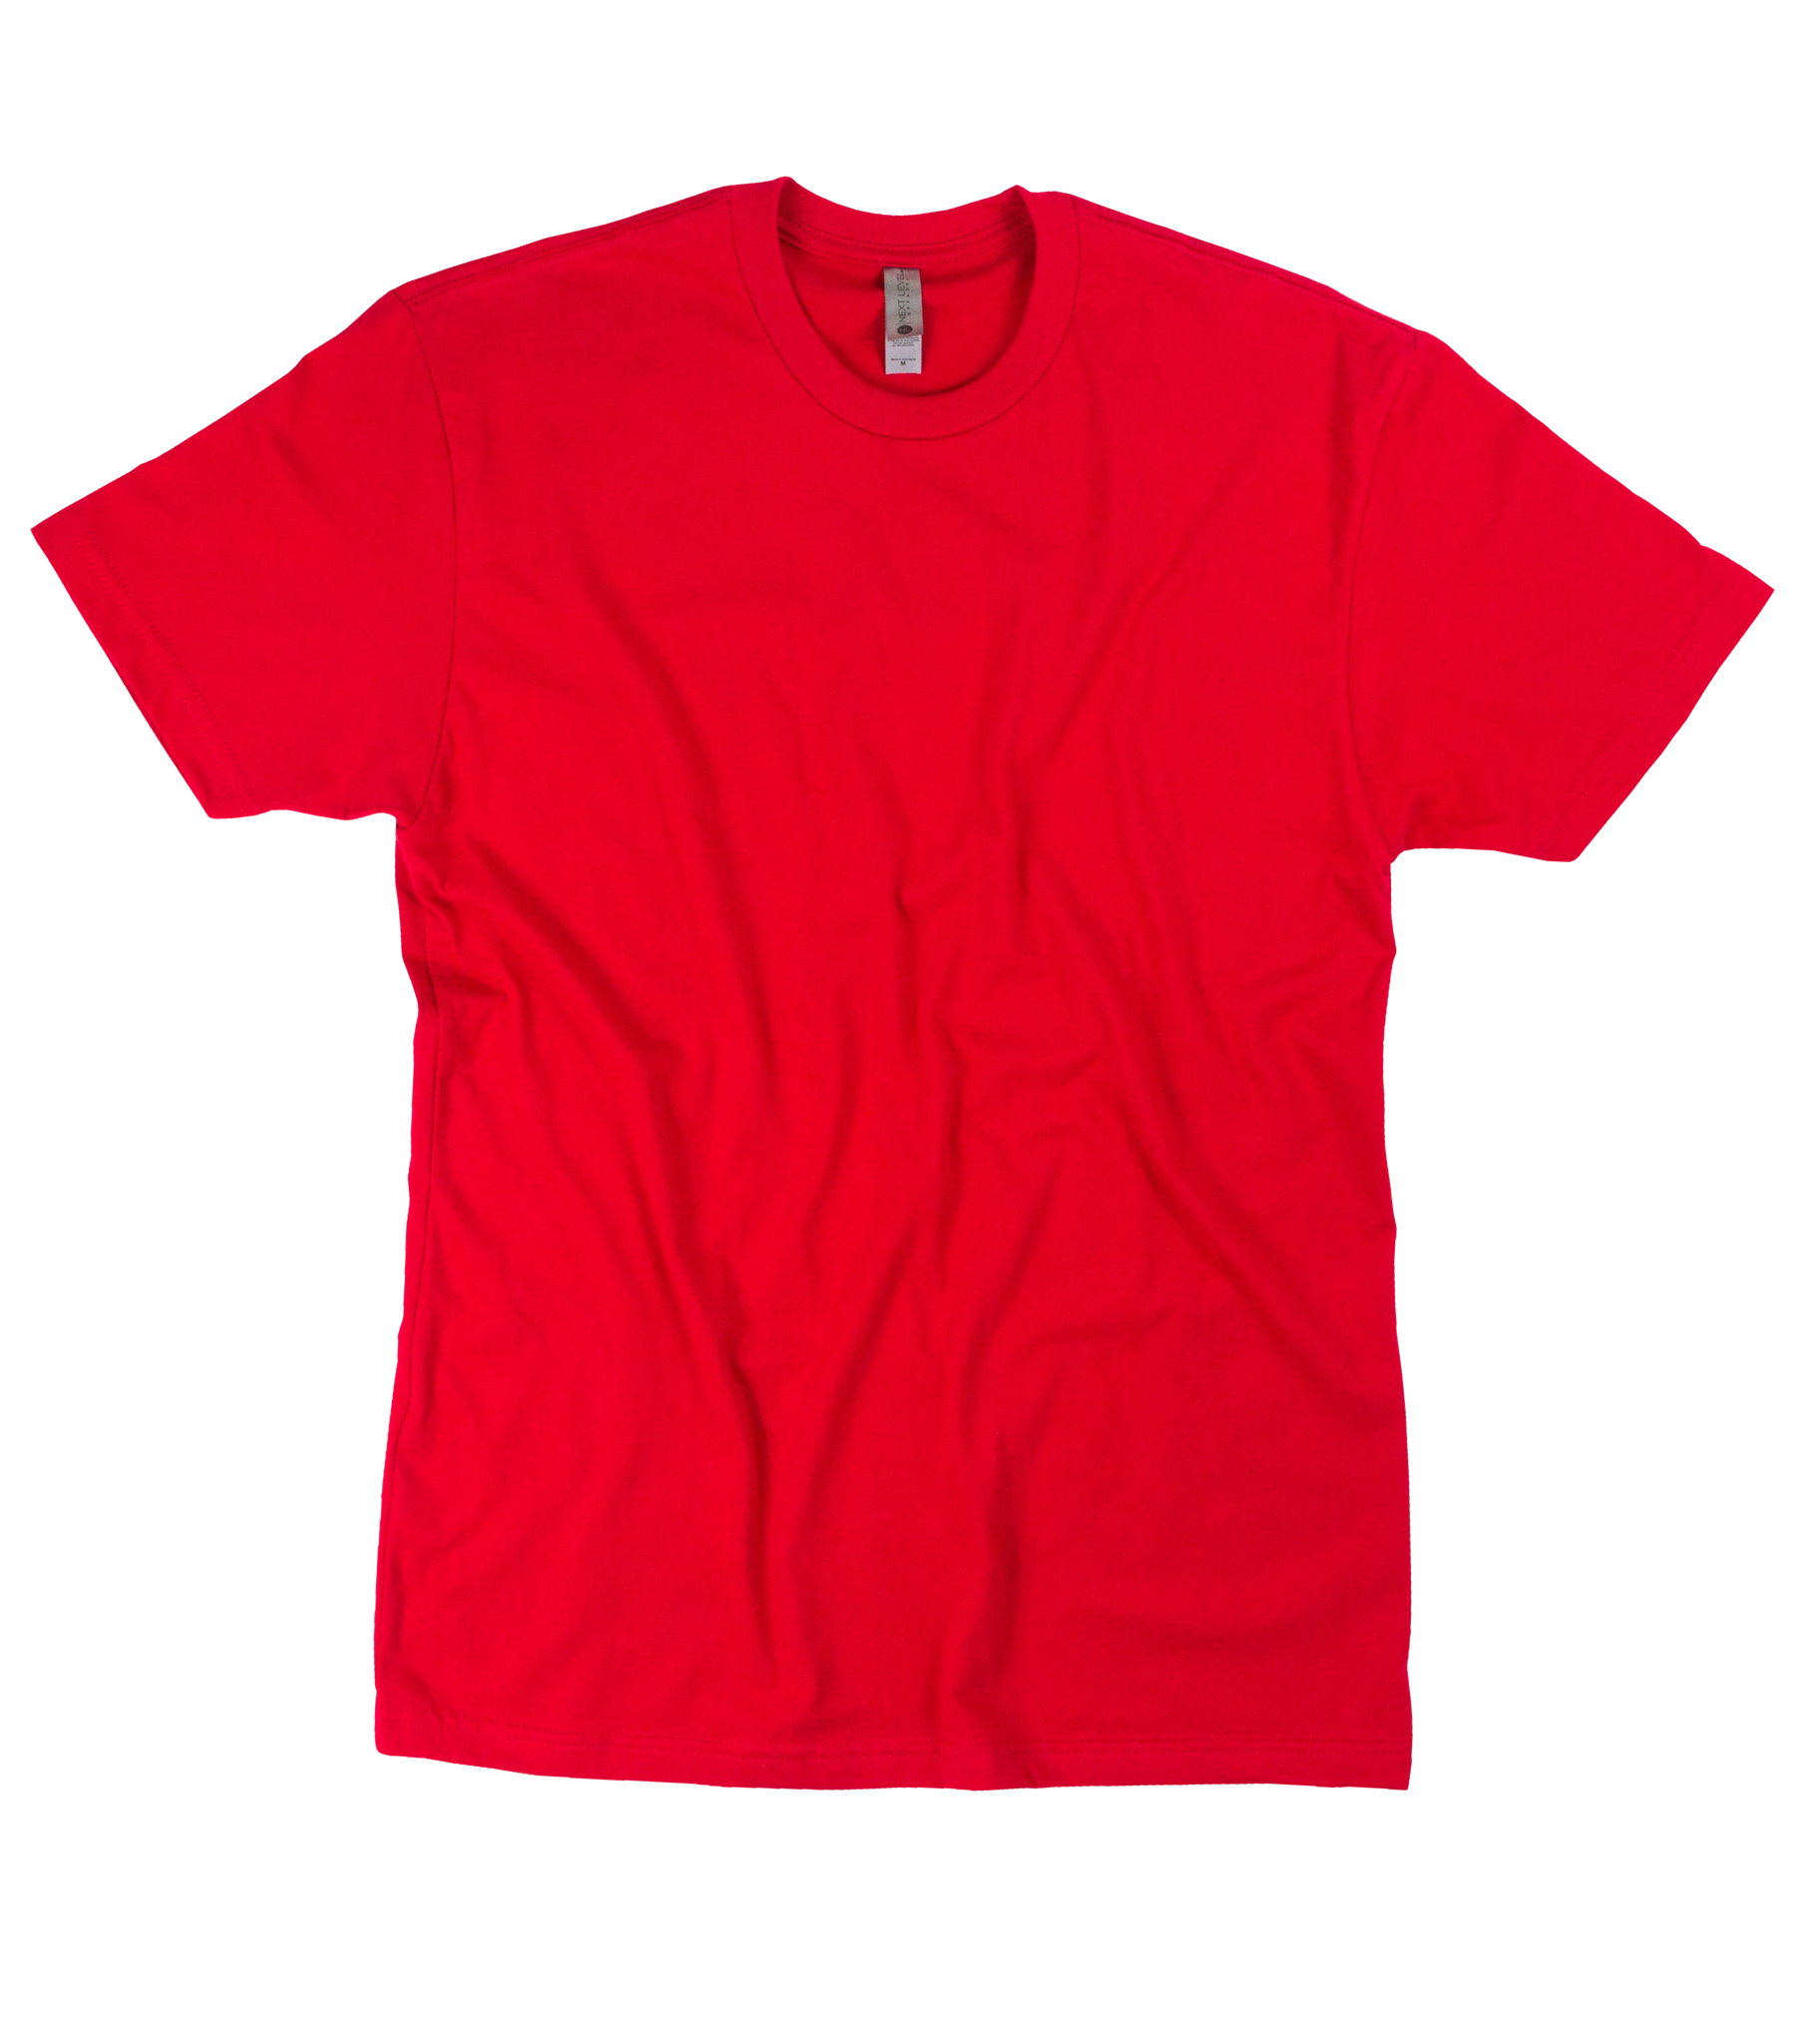 Dark Red T Shirt Template - mockup